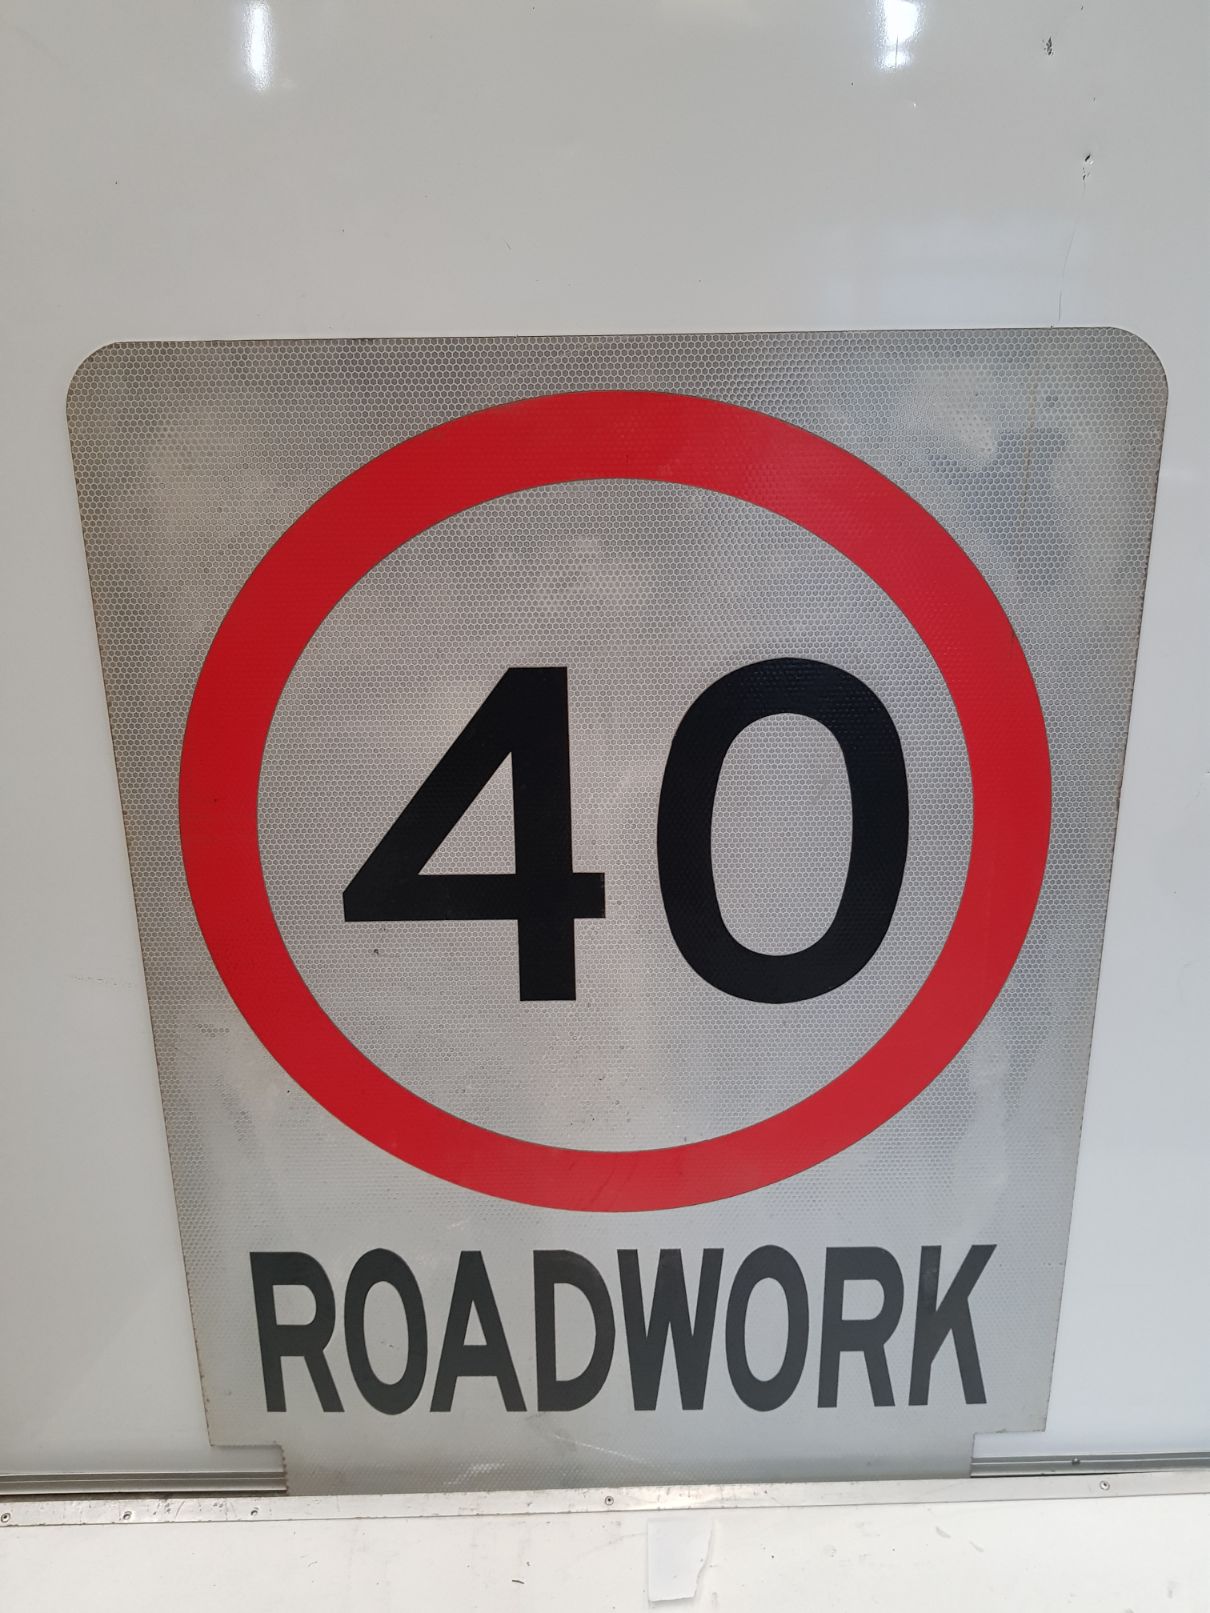 Roadwork 40 Speed Sign (2).jpg